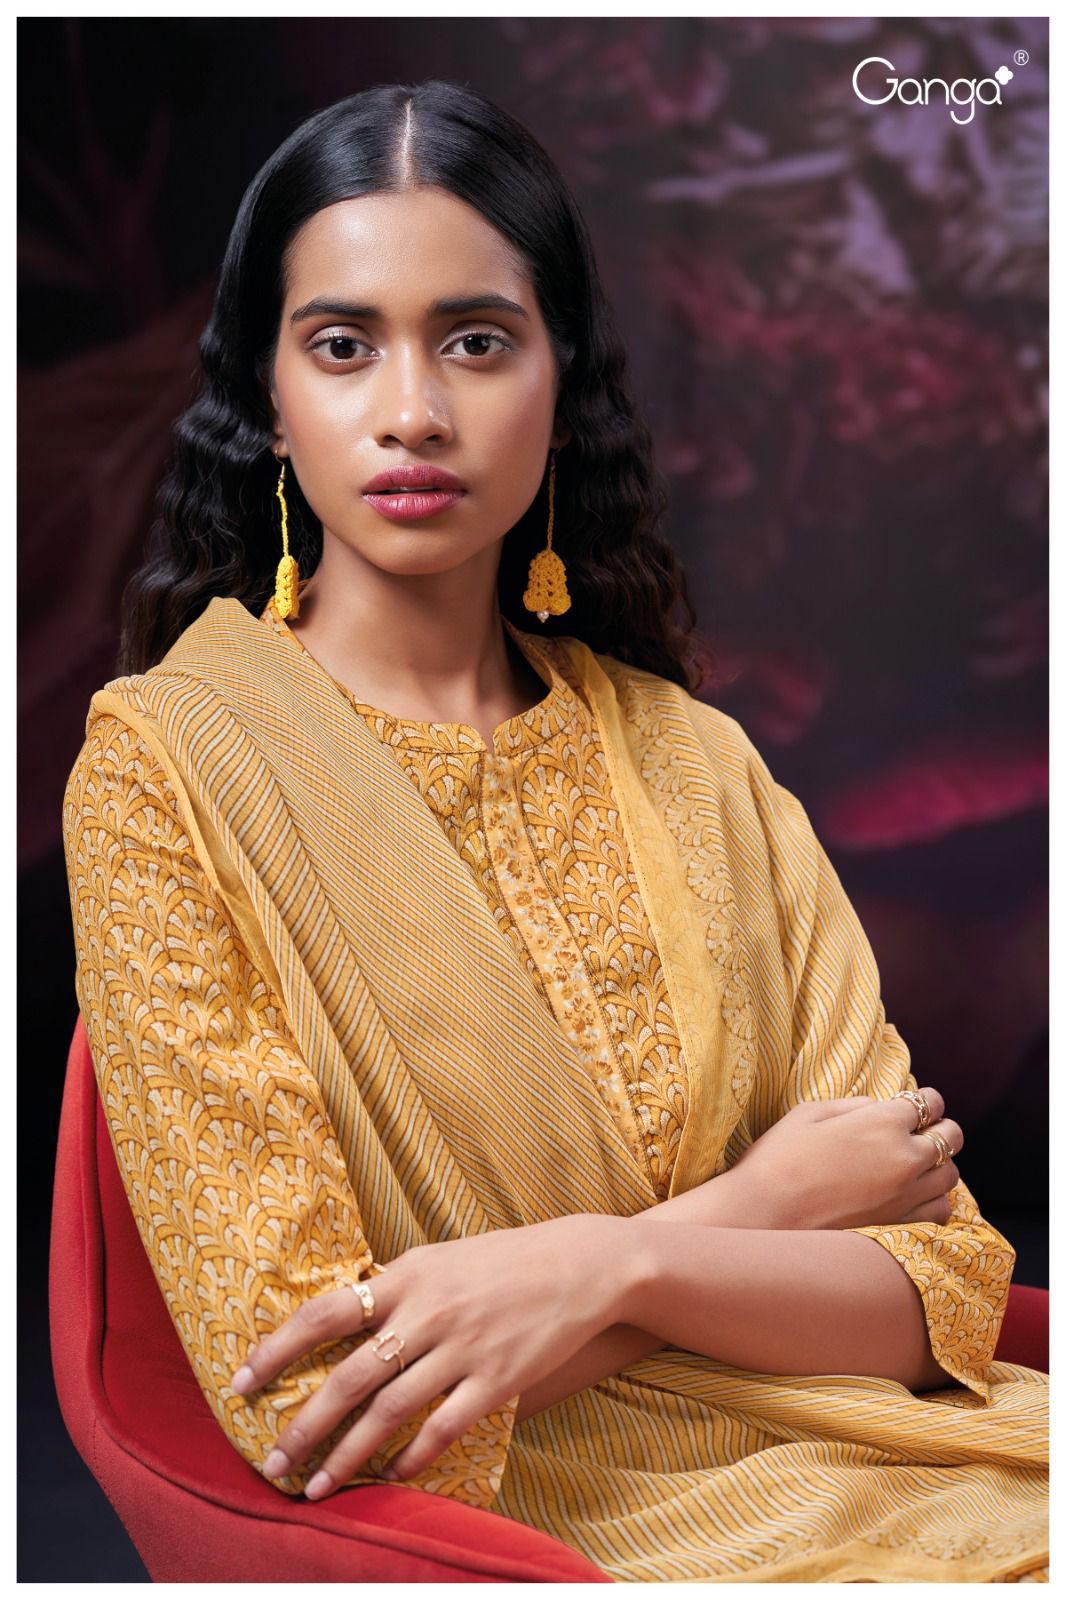 Hesha 2550 Ganga Premium Cotton Plazzo Style Suits Wholesaler Gujarat